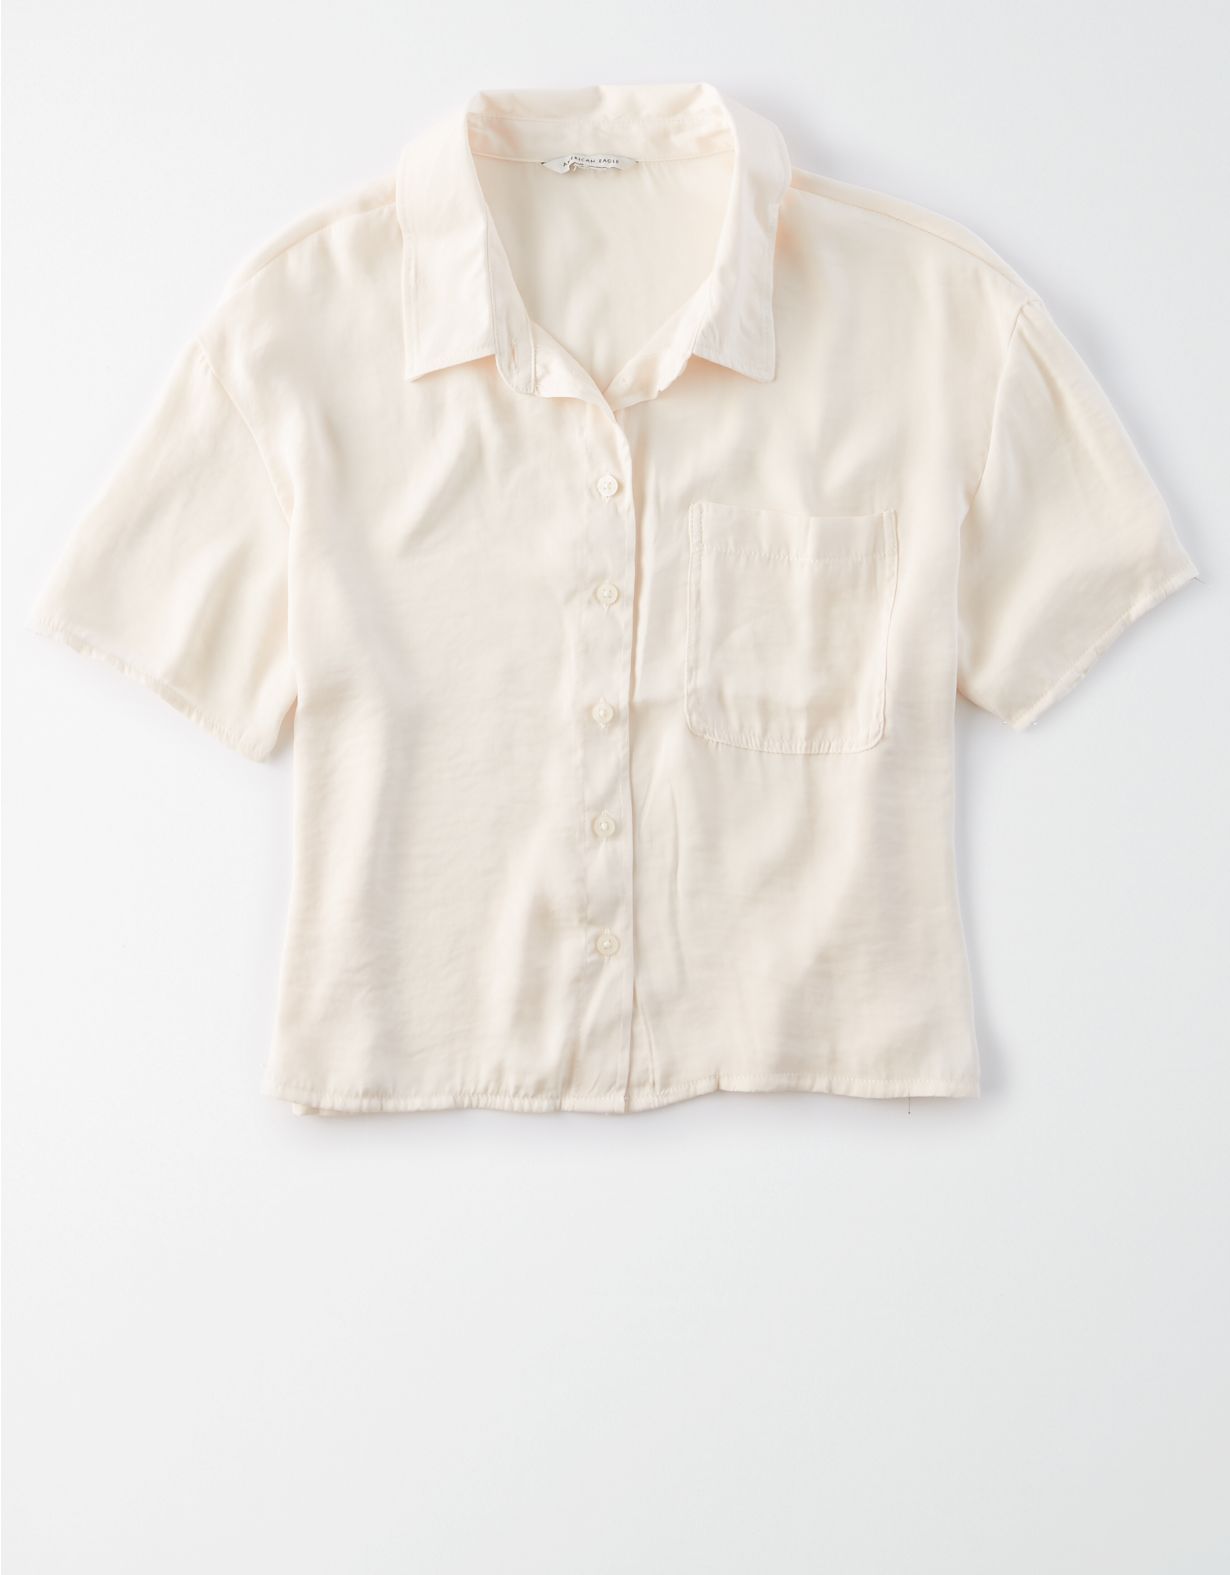 AE Silky Short Sleeve Button Up Shirt